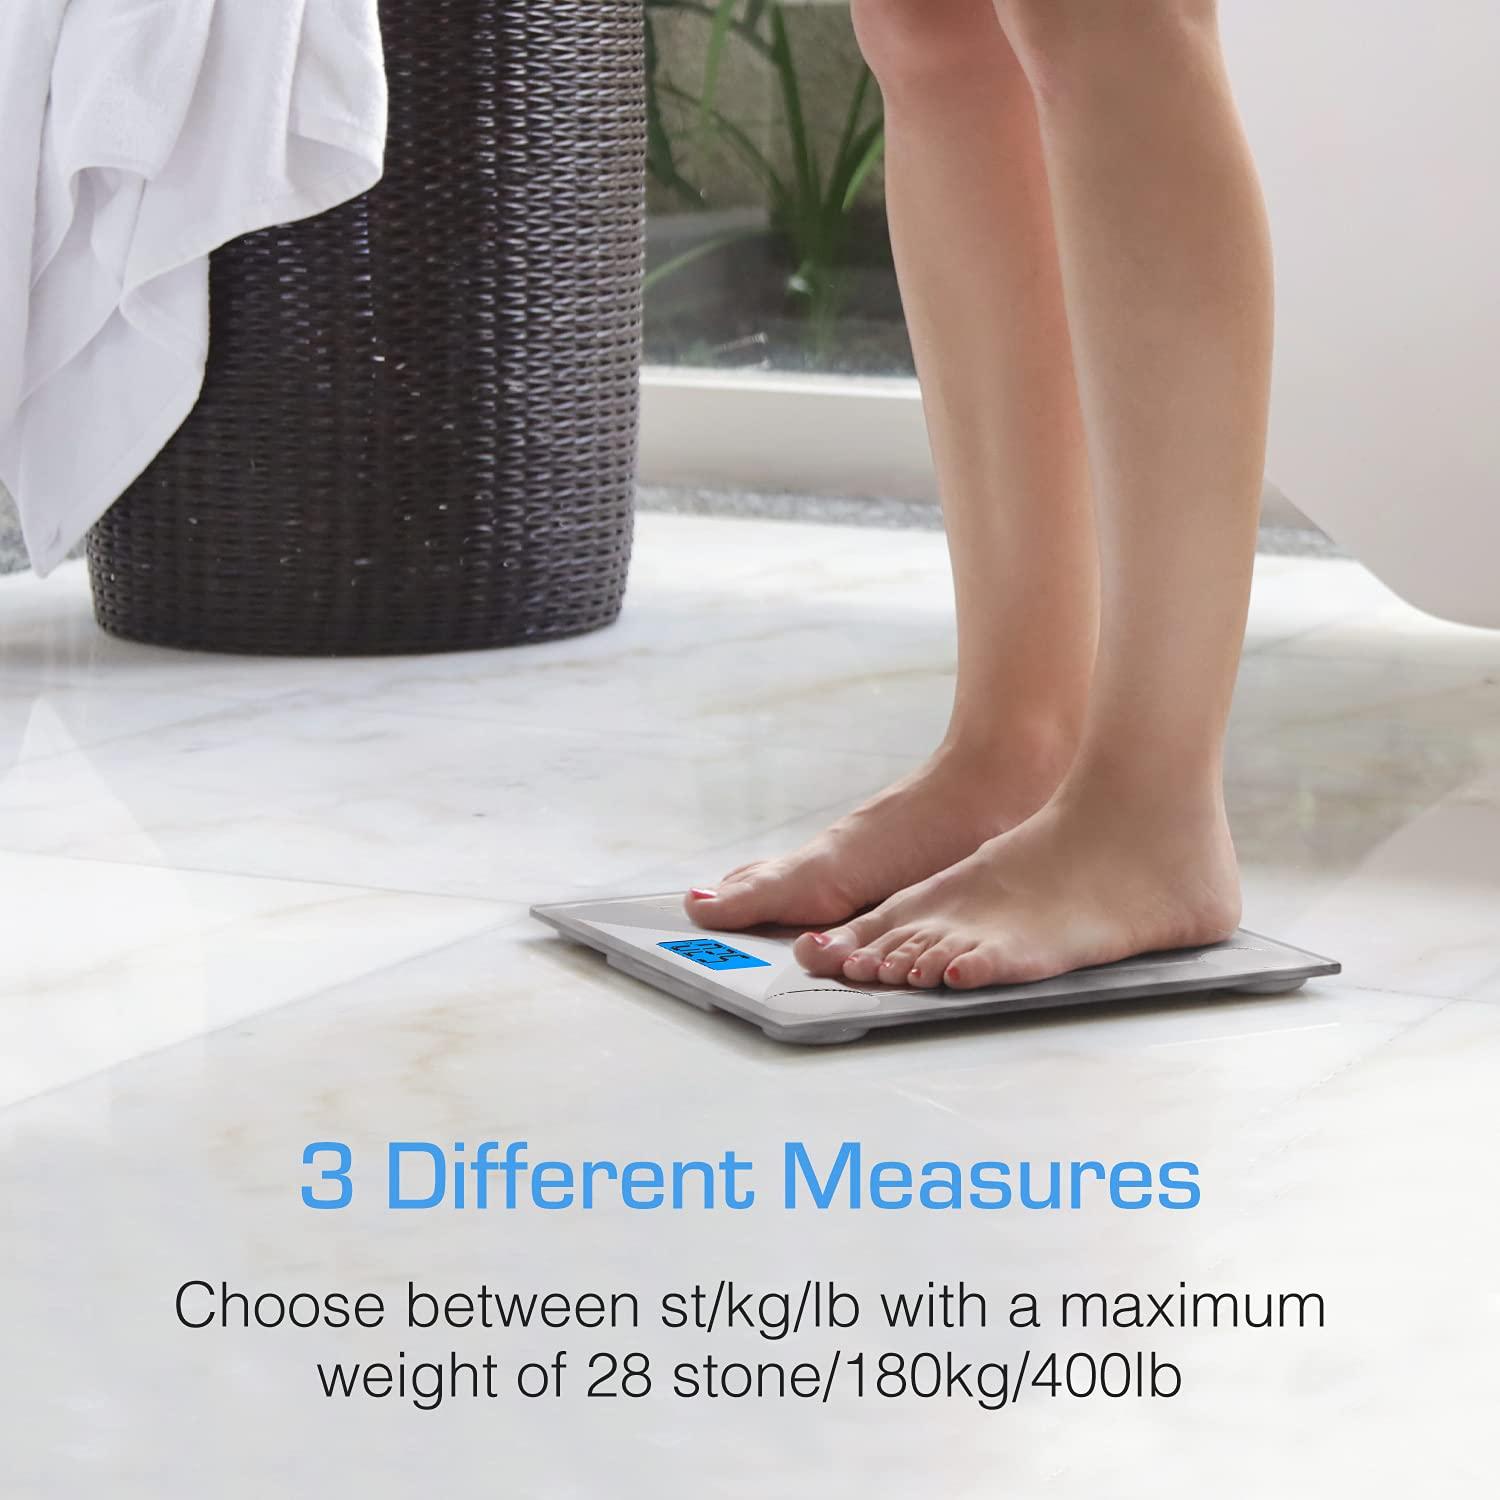 High Capacity Digital Bathroom Scale with Backlit Display